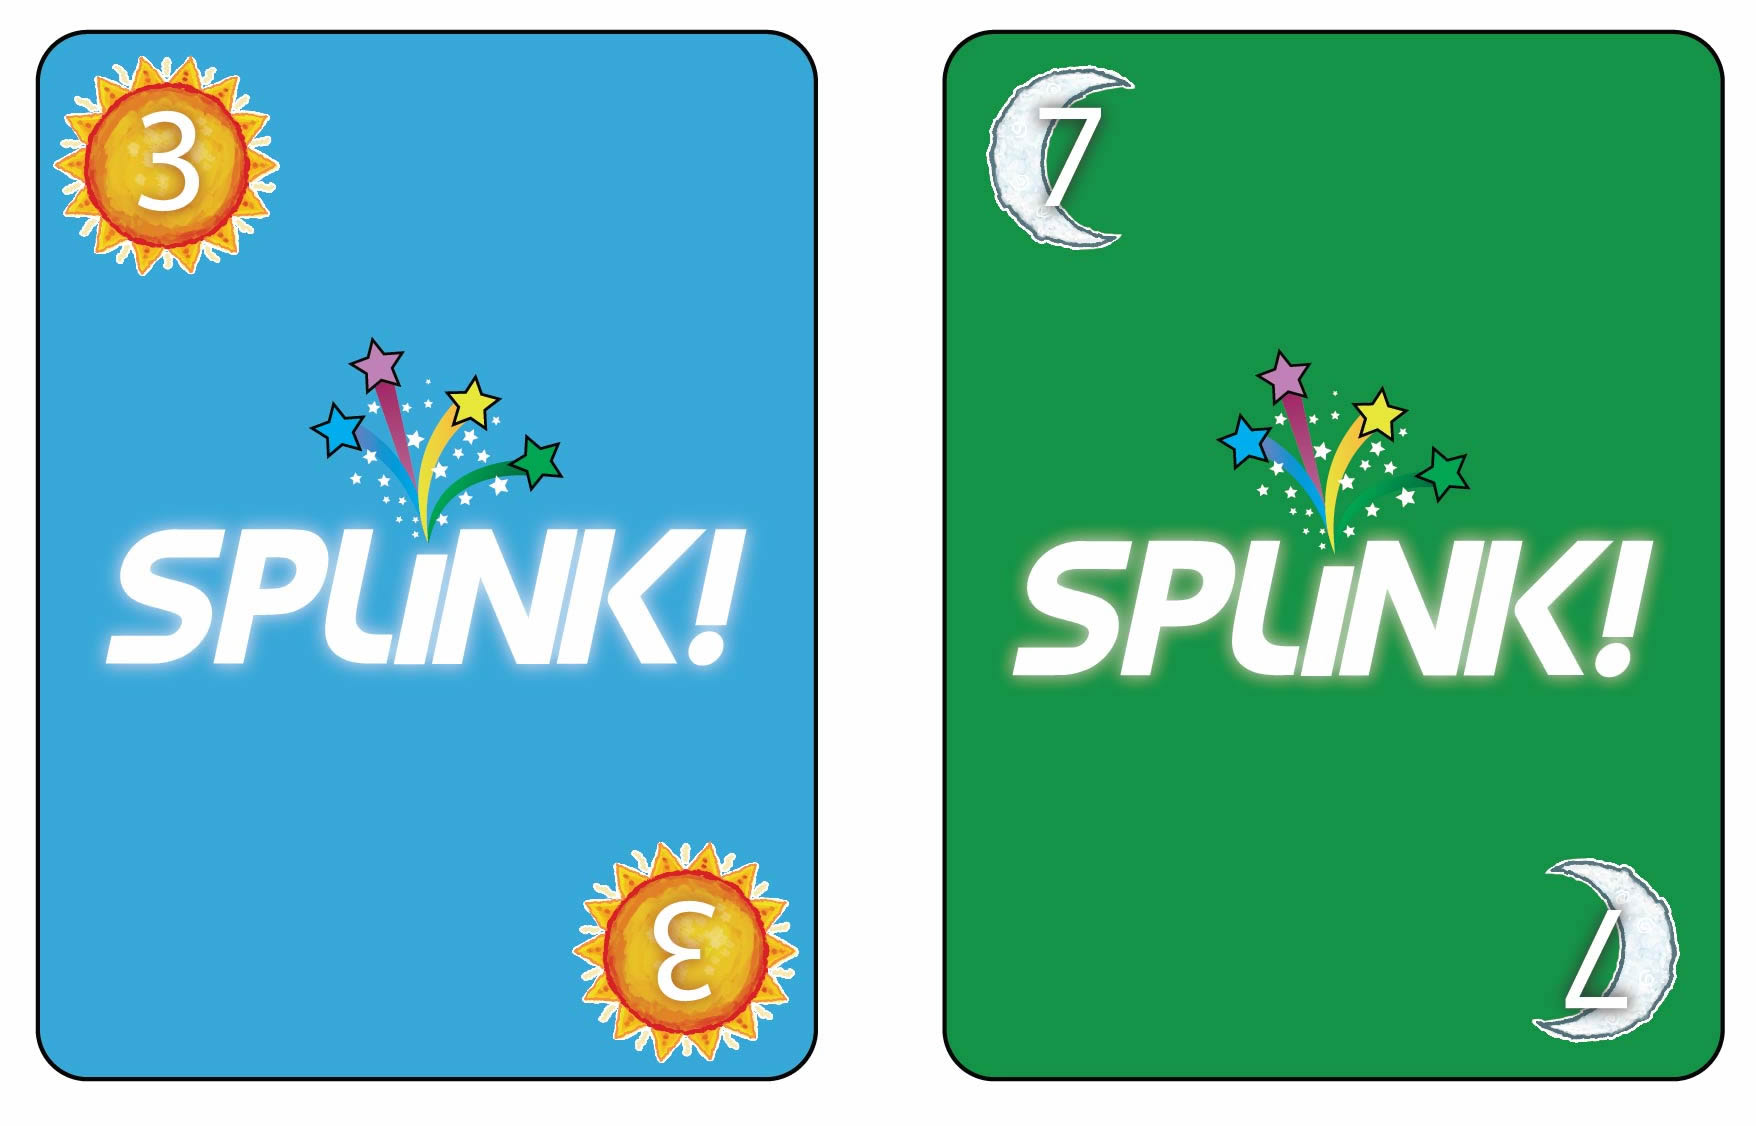 splink_cards